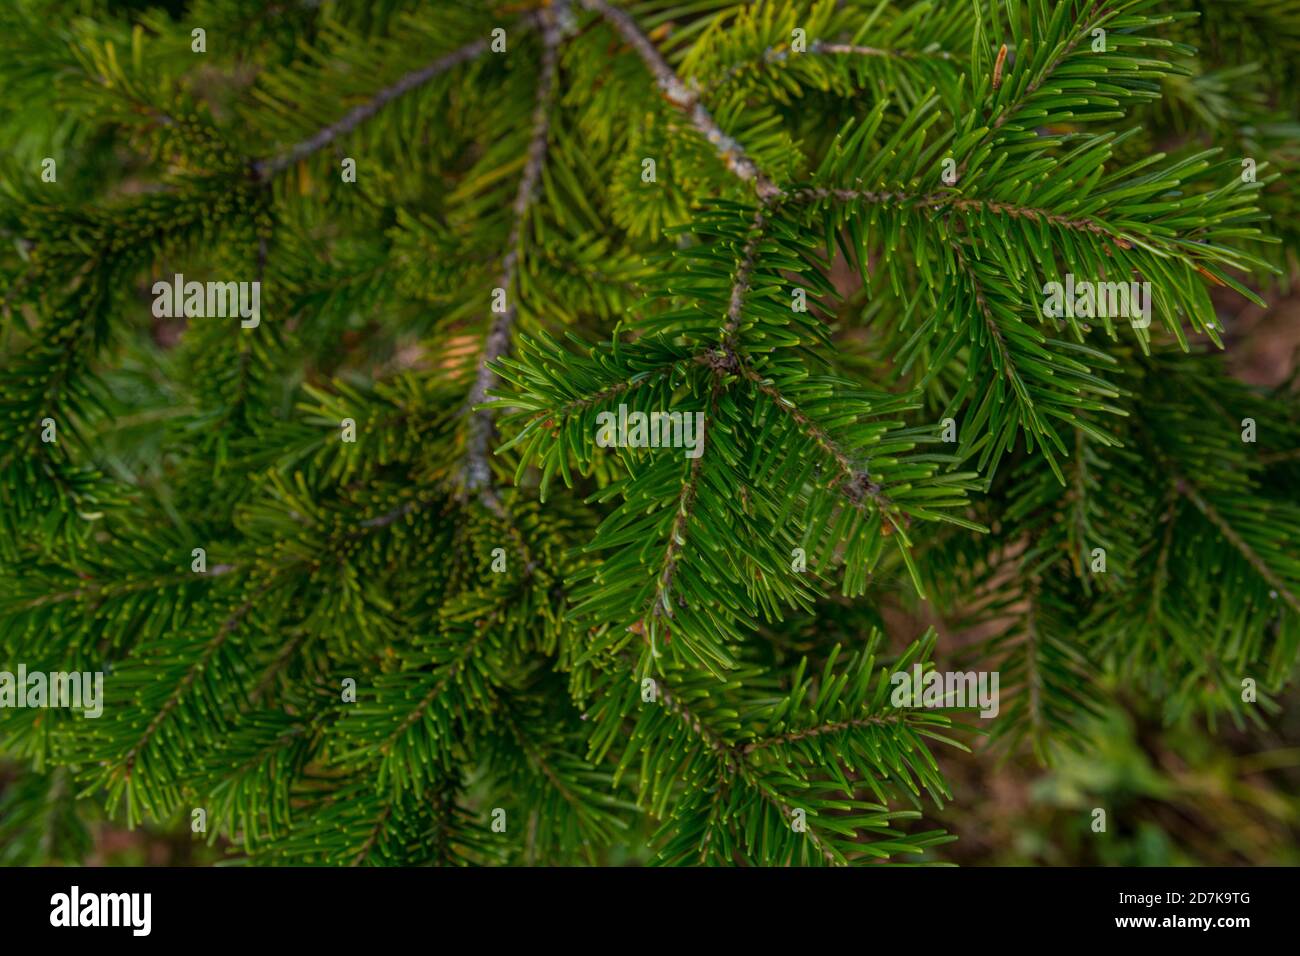 A branch of green fir tree close-up. Stock Photo